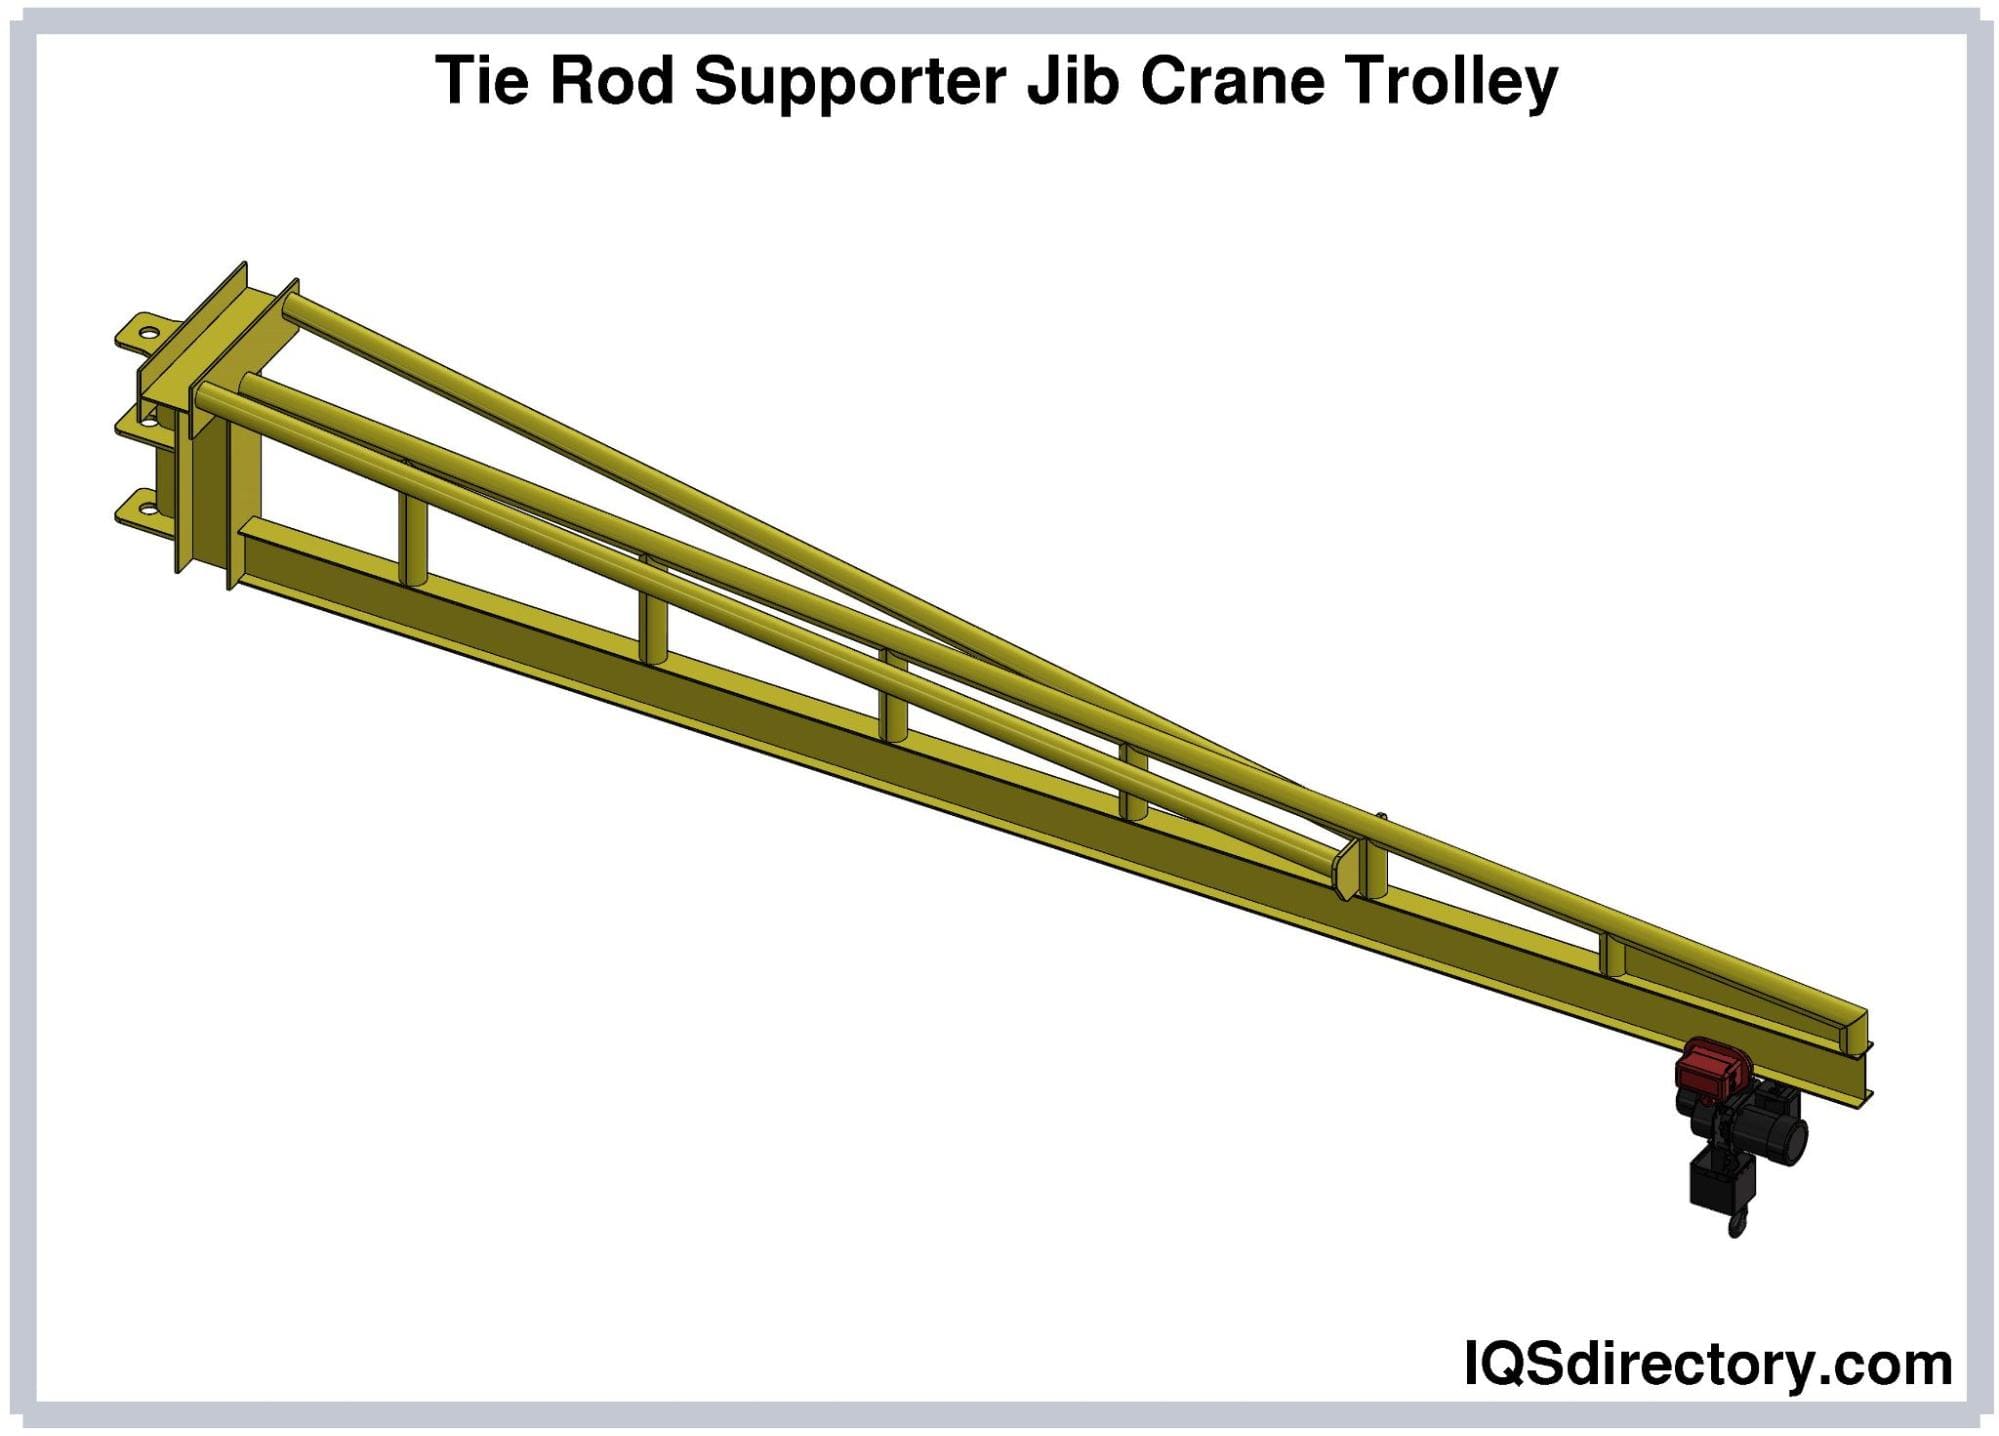 Tie Rod Supporter Jib Crane Trolley